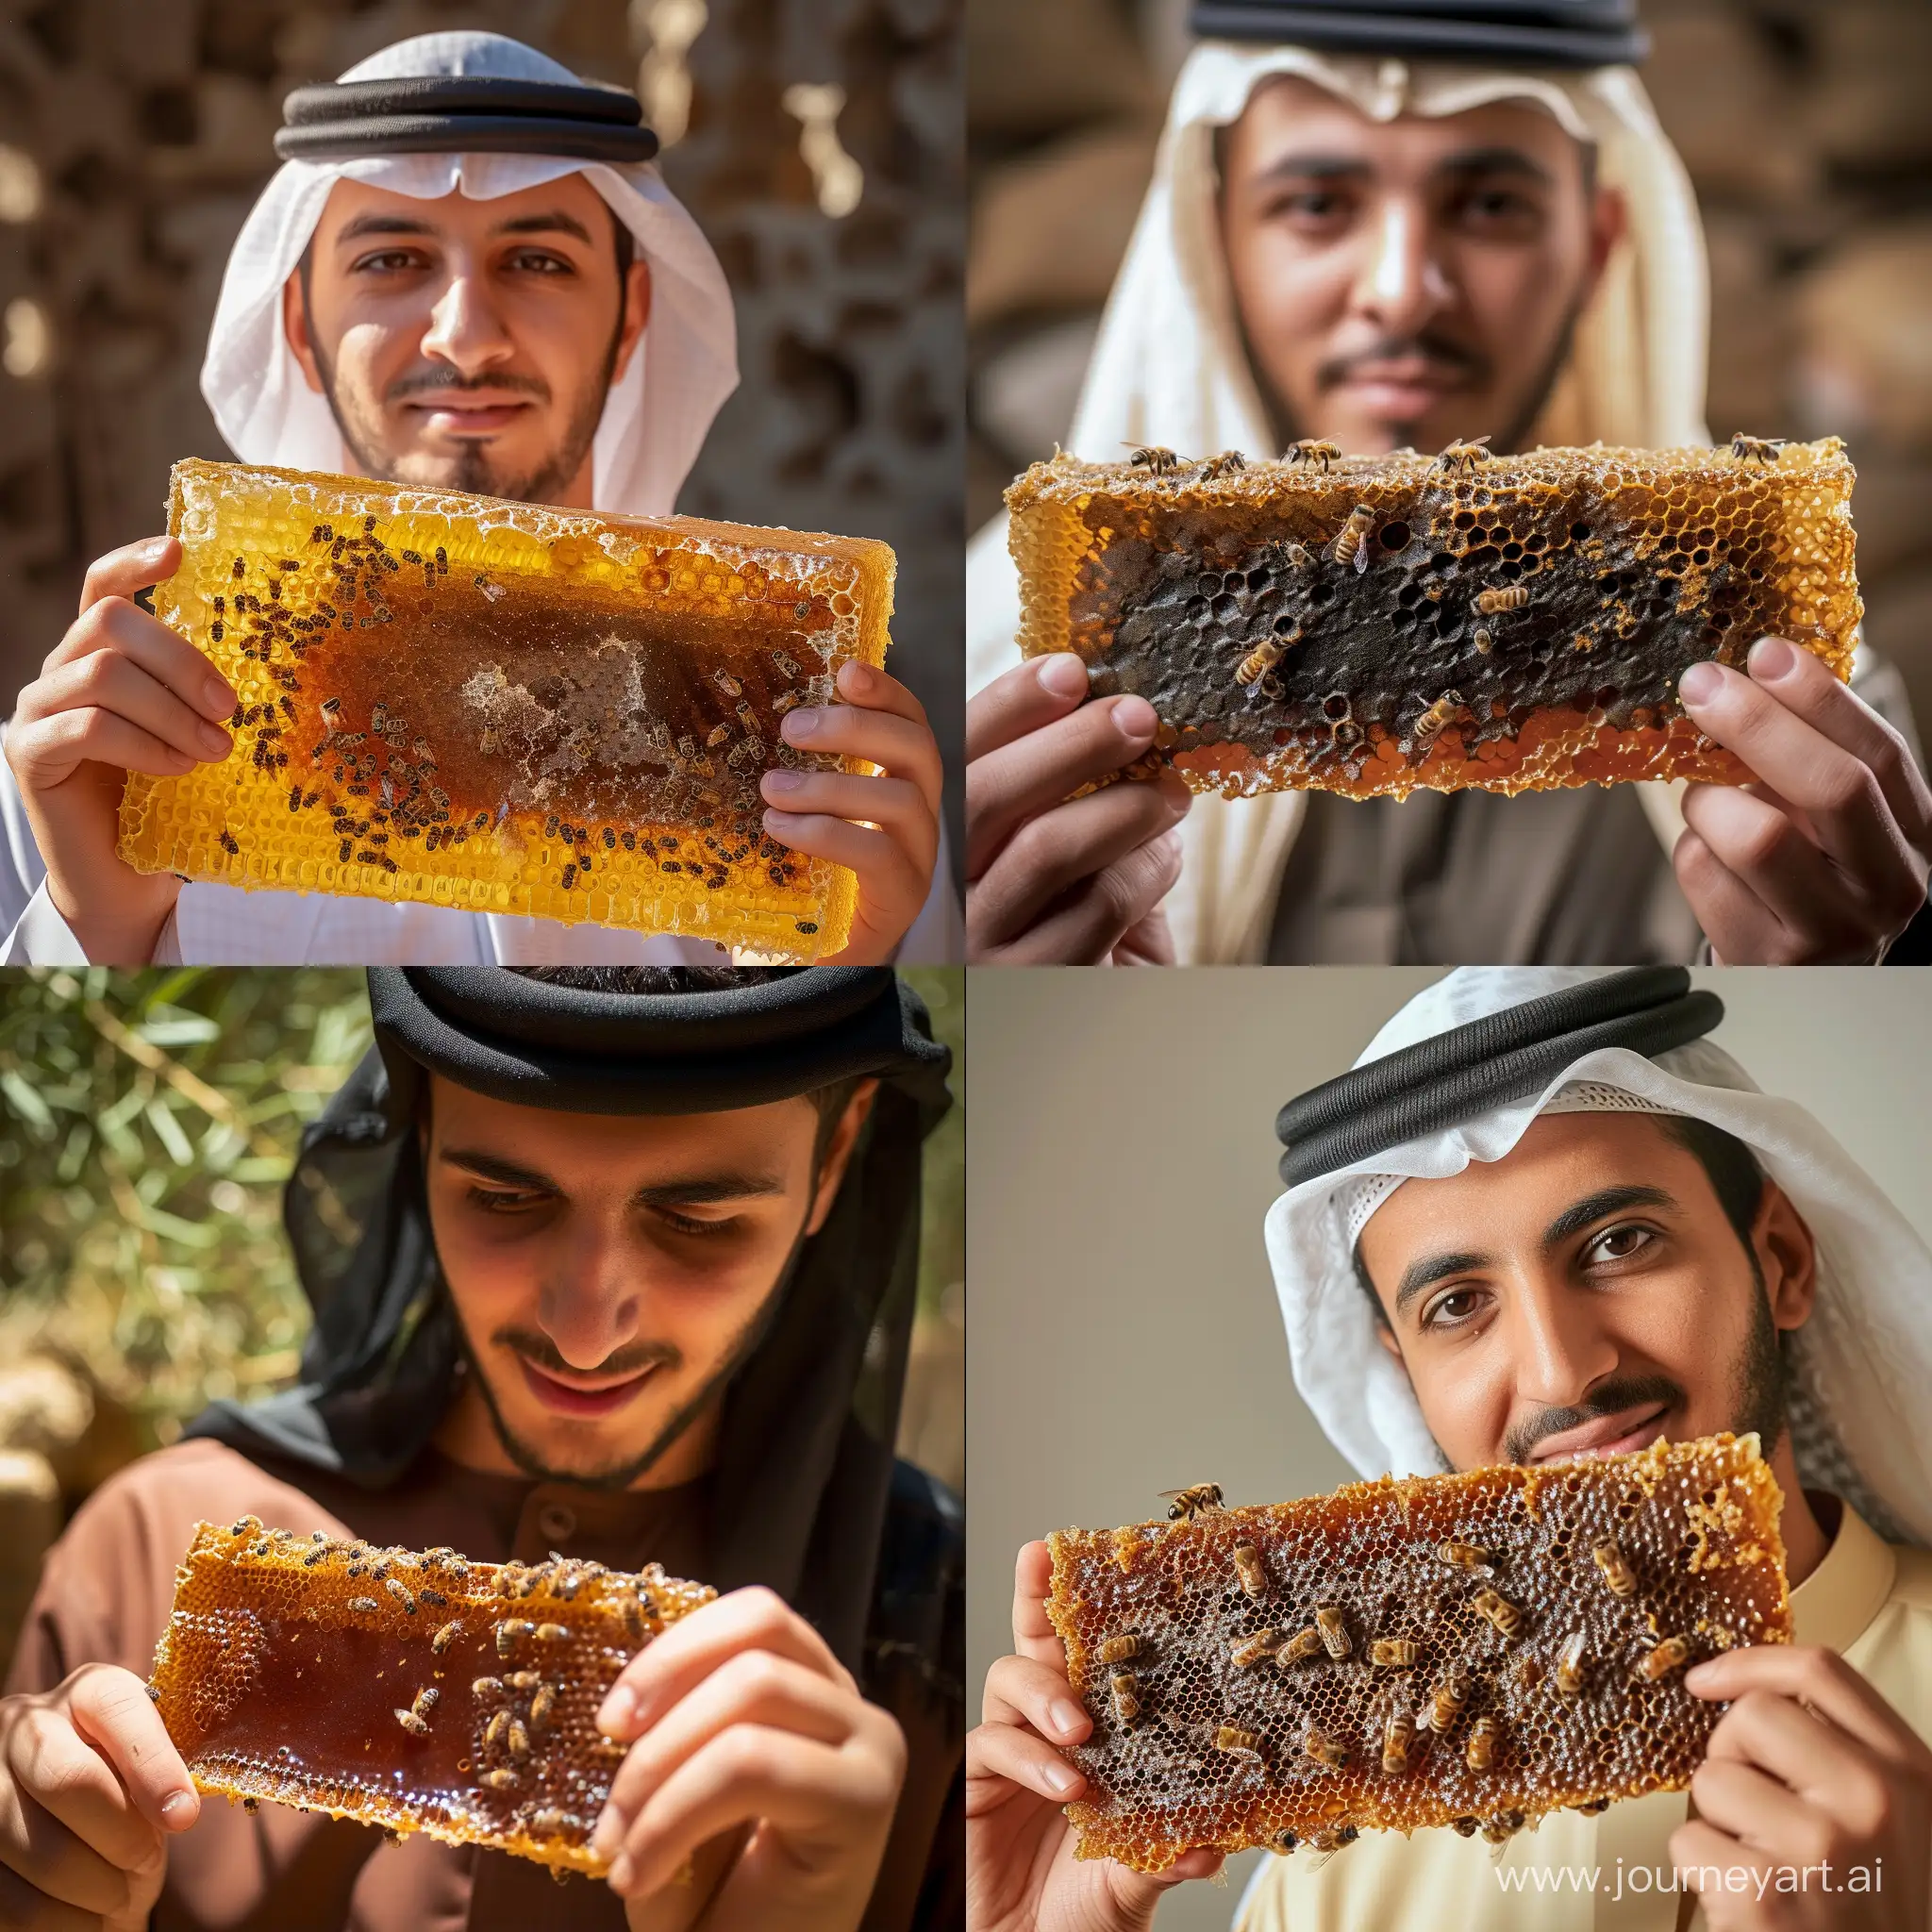 Arabic-Man-Holding-Rectangular-Propolis-with-Bees